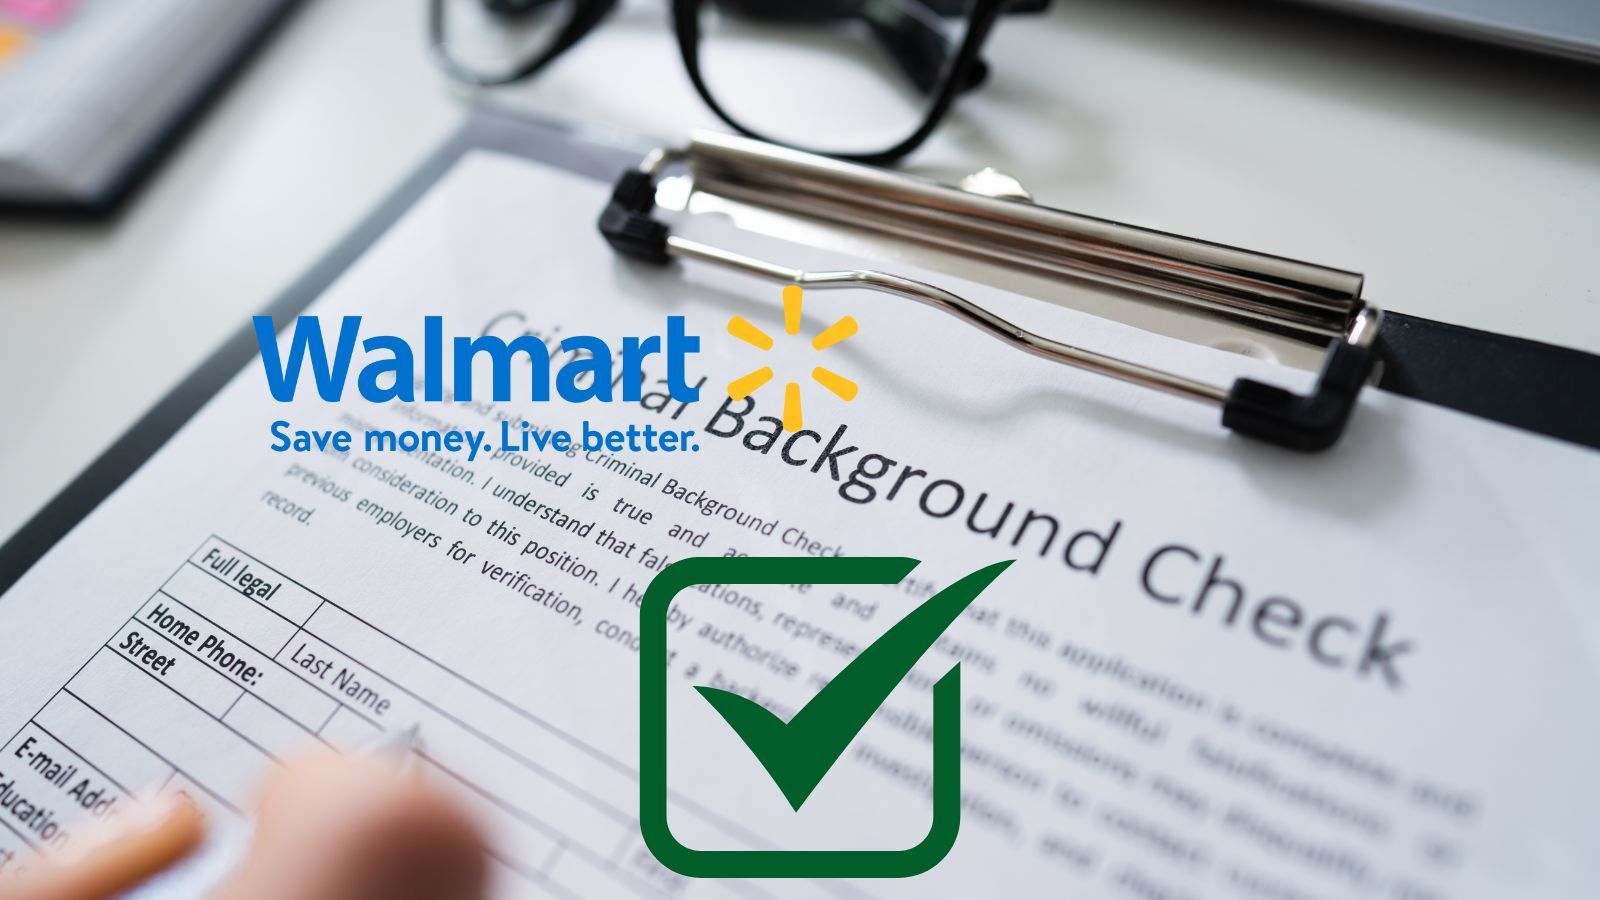 Does Walmart Do Background Checks?